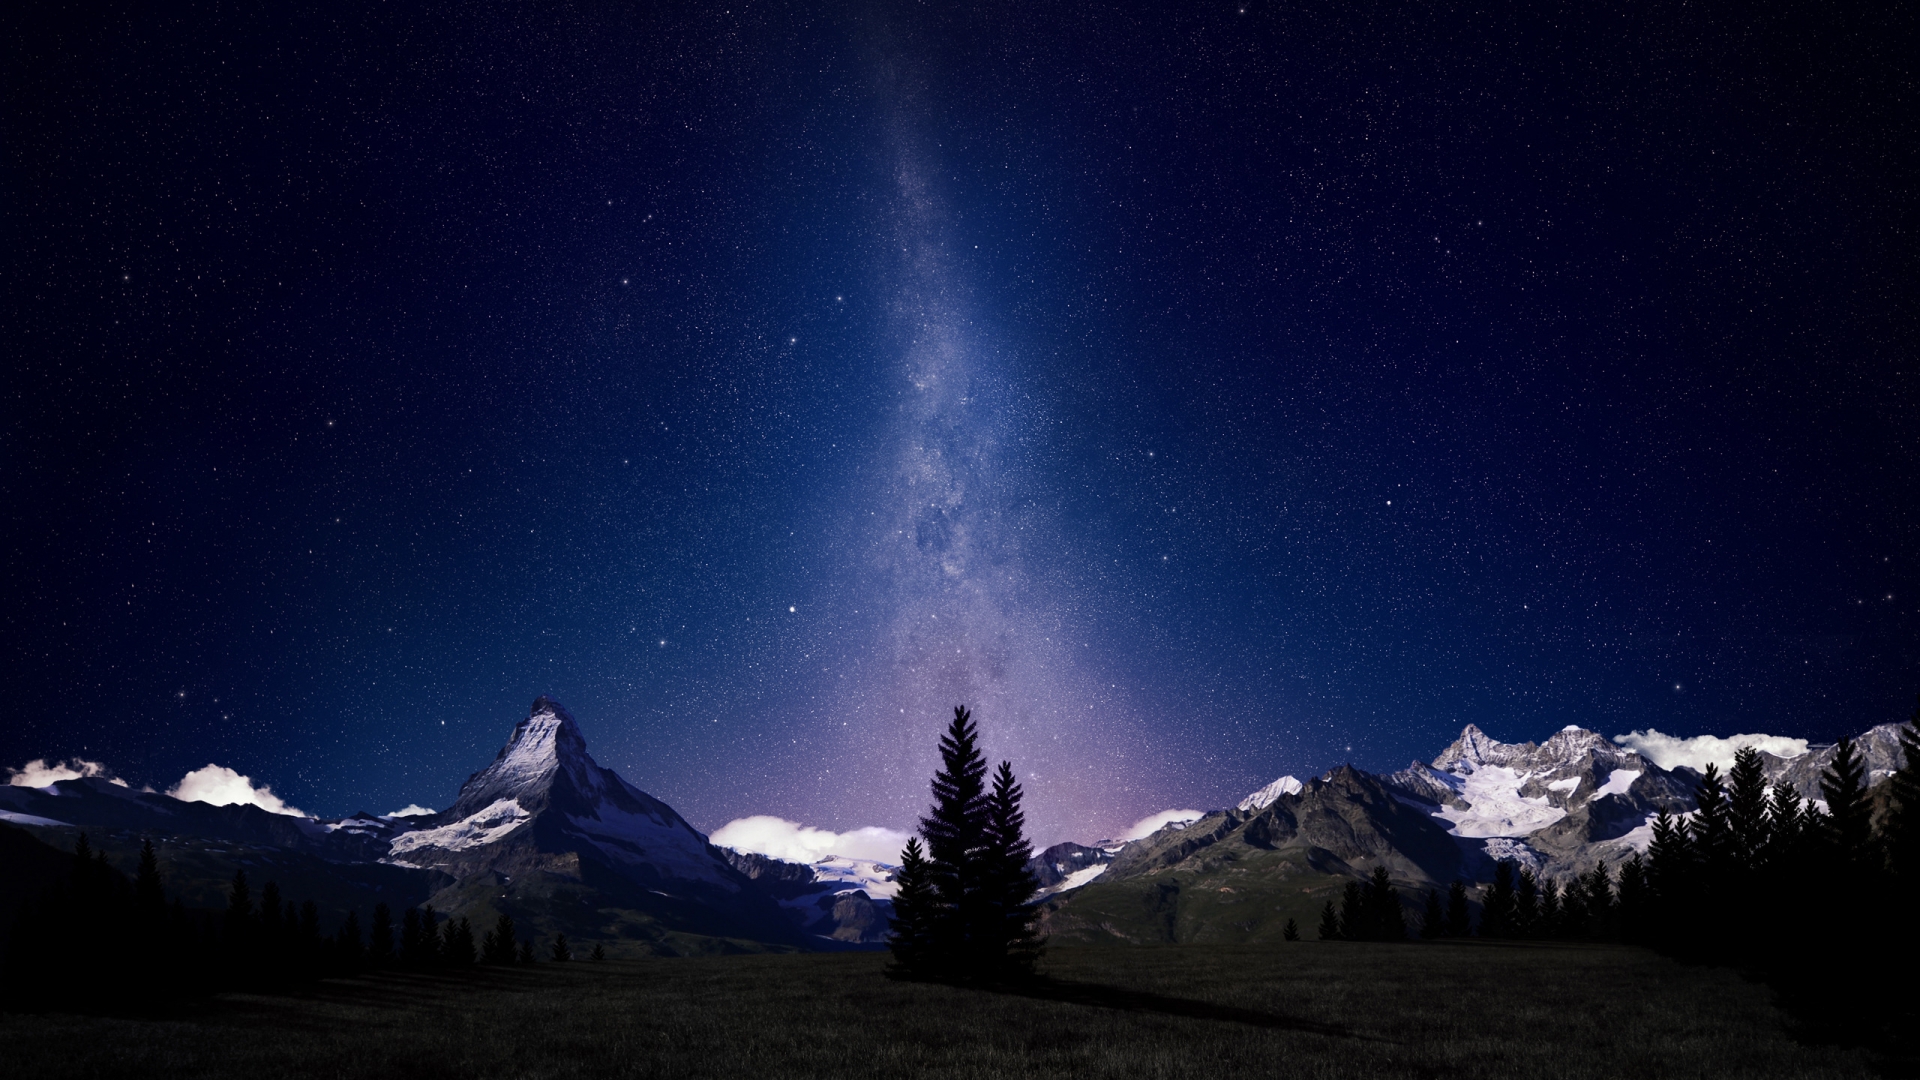 Alpine Night Sky for 1920 x 1080 HDTV 1080p resolution